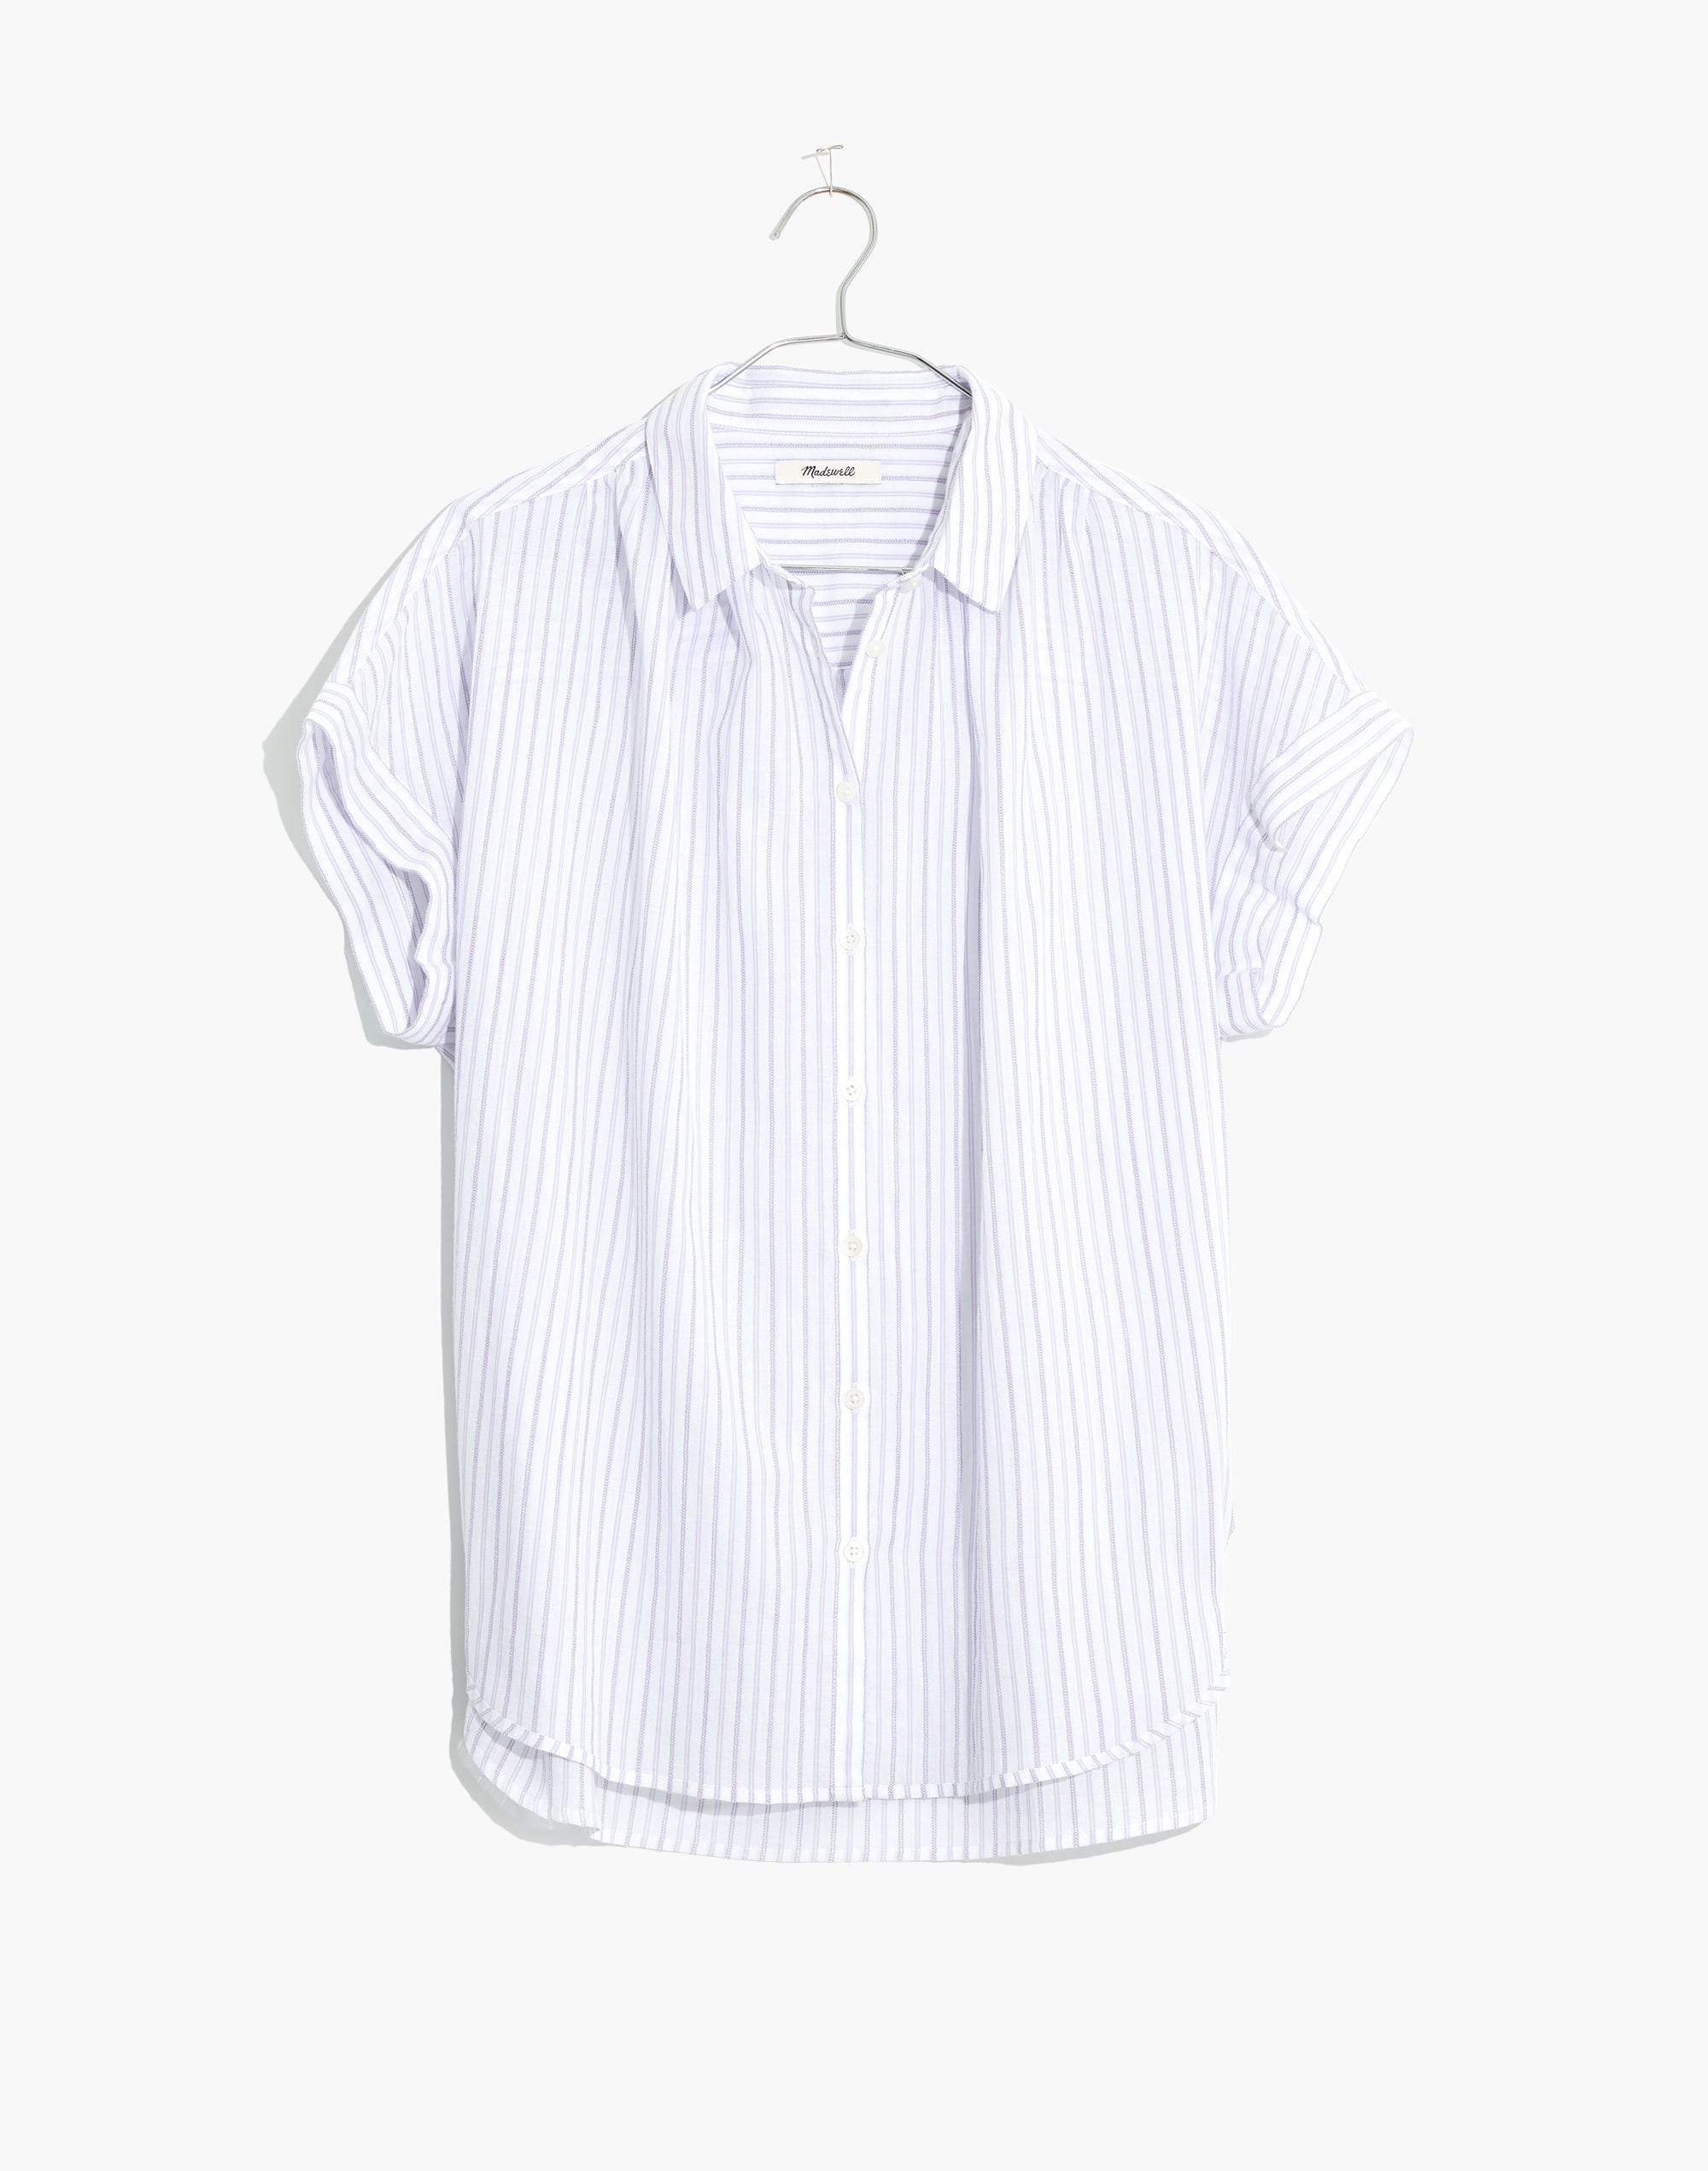 Central Tunic Shirt in Lavender Stripe